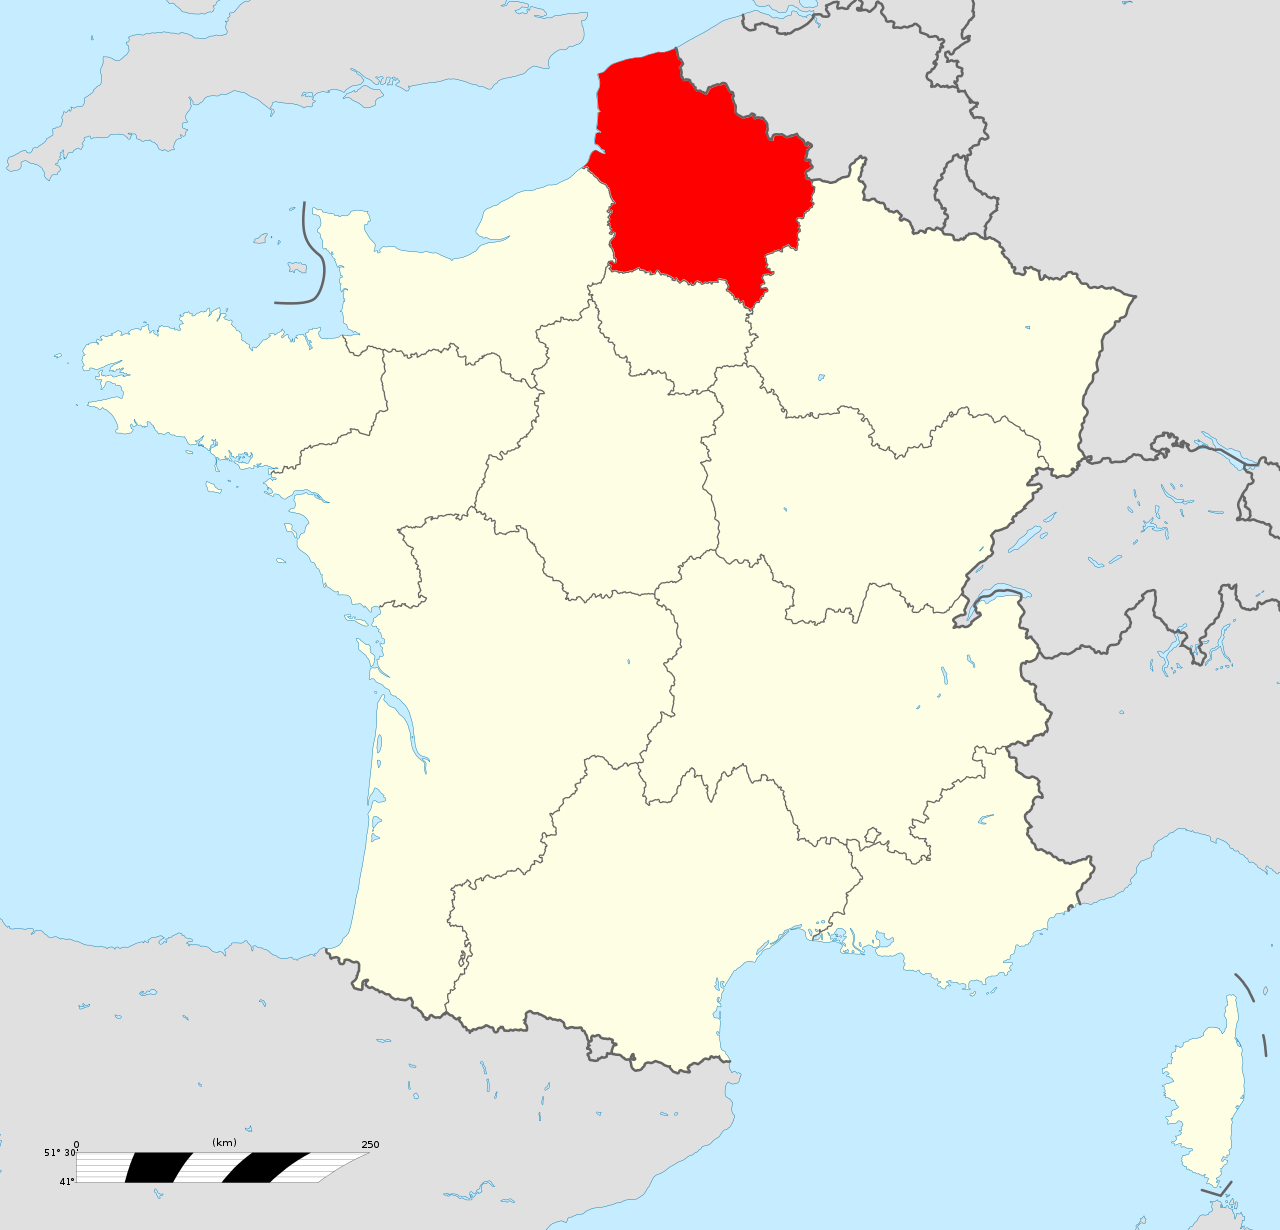 Benedicte Abbey Urbex location or around the region Hauts-de-France (Aisne), France